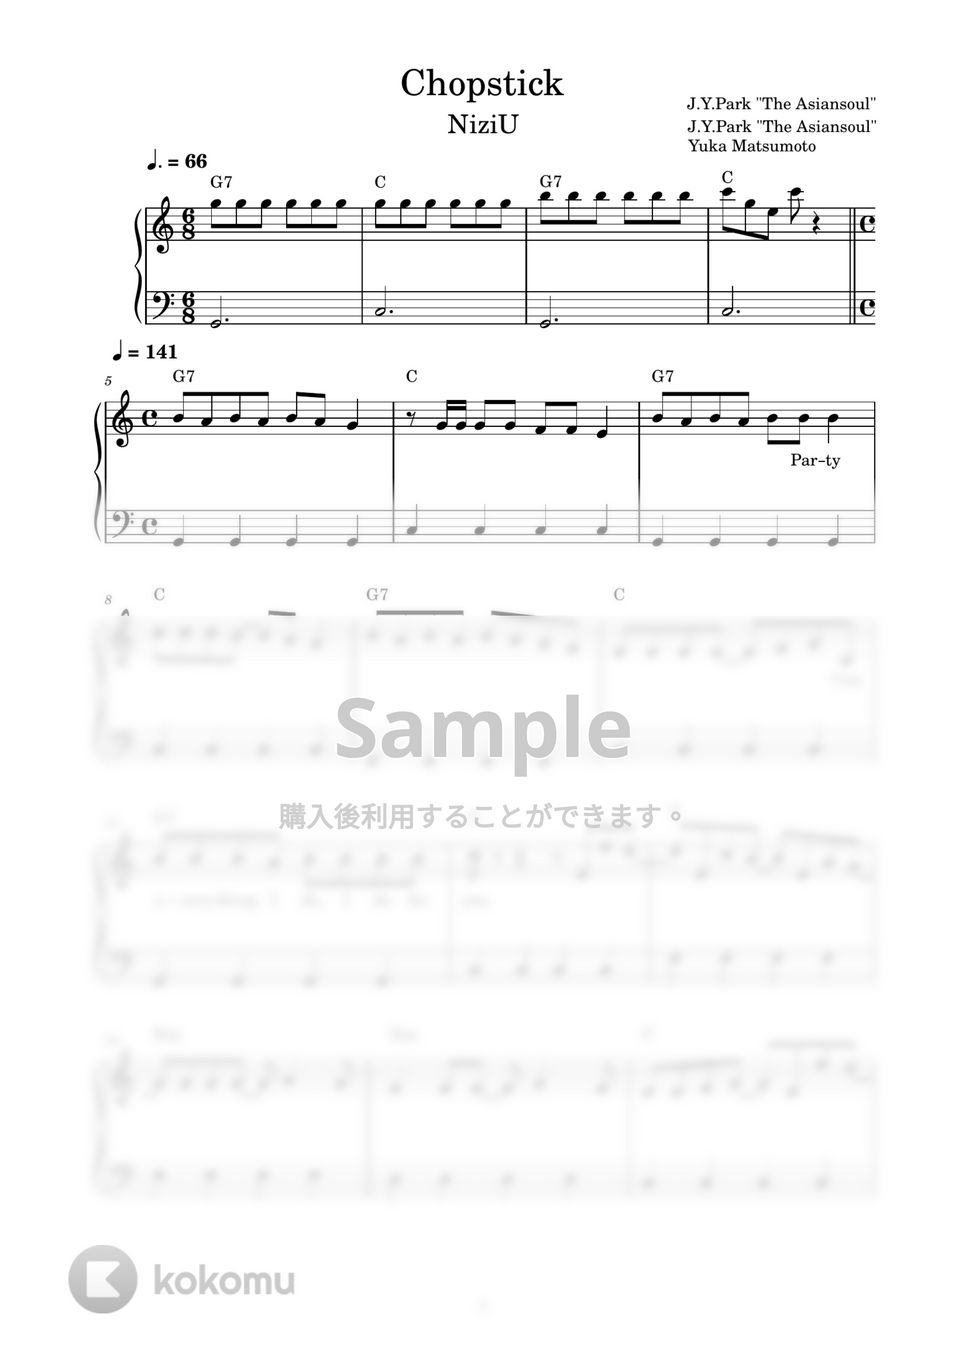 NiziU - Chopstick (ピアノ楽譜 / かんたん両手 / 歌詞付き / ドレミ付き / 初心者向き) by piano.tokyo